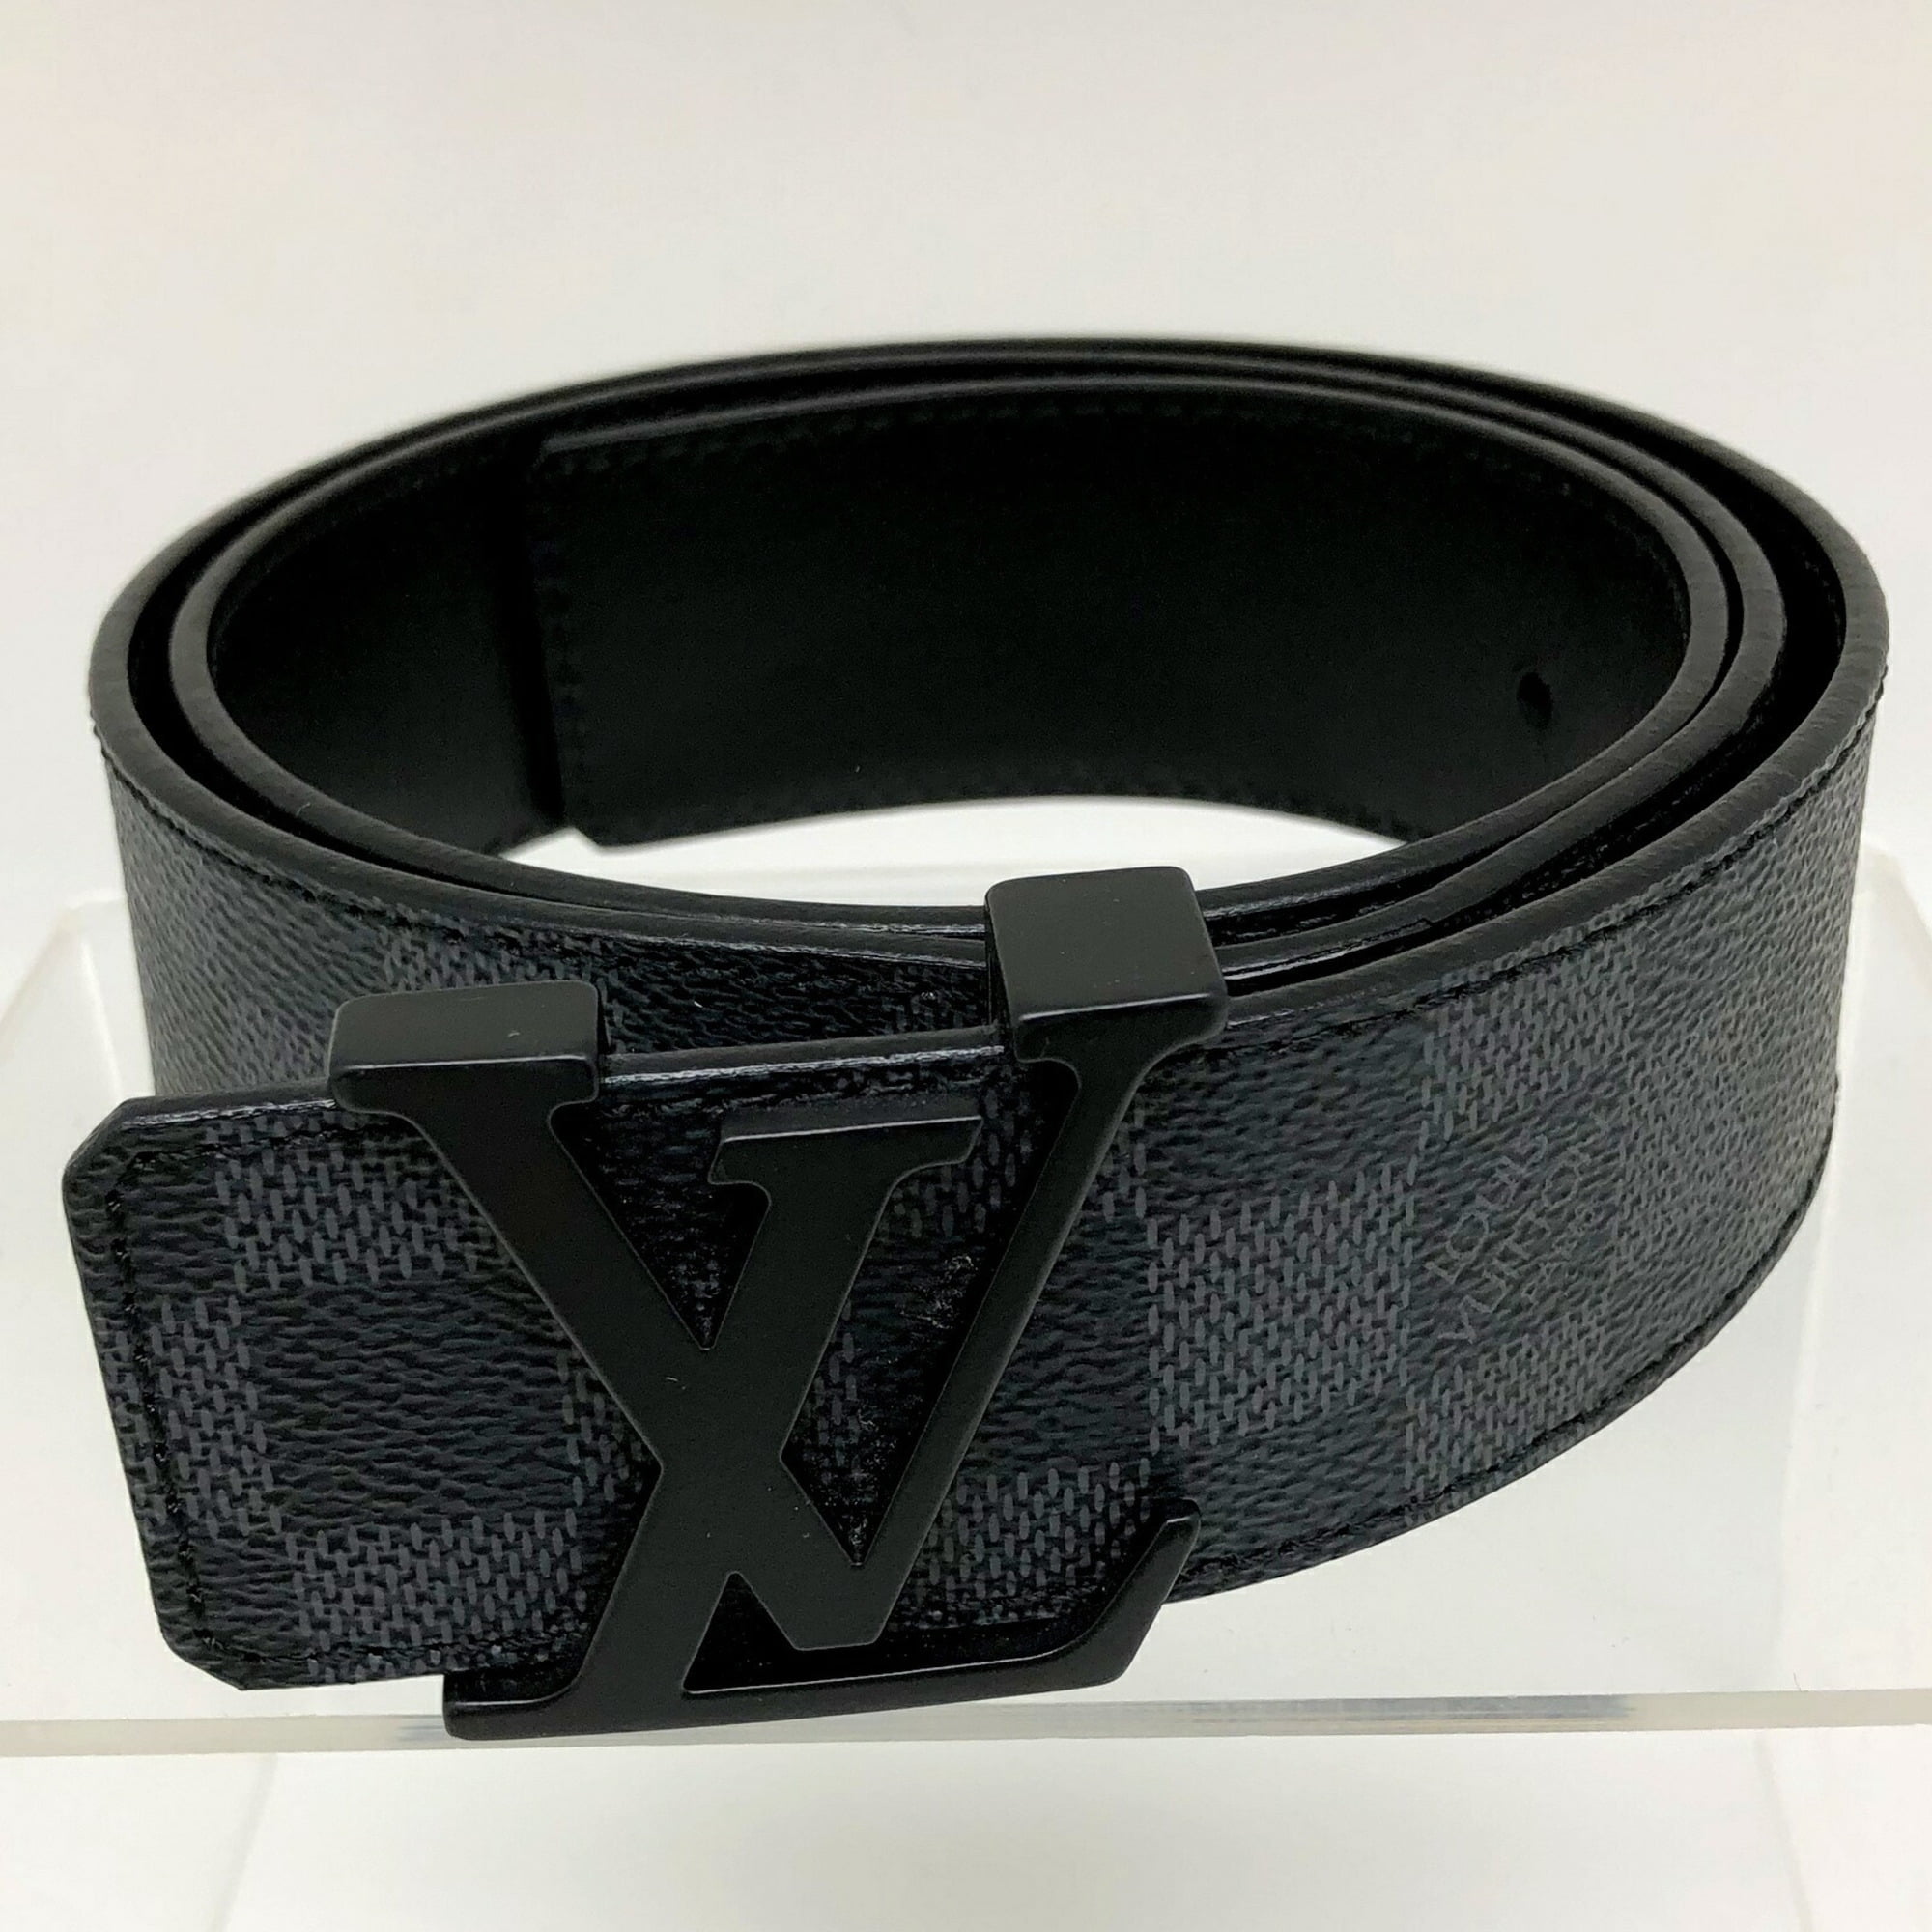 Louis Vuitton 2009 Damier Graphite Pattern Belt - Black Belts